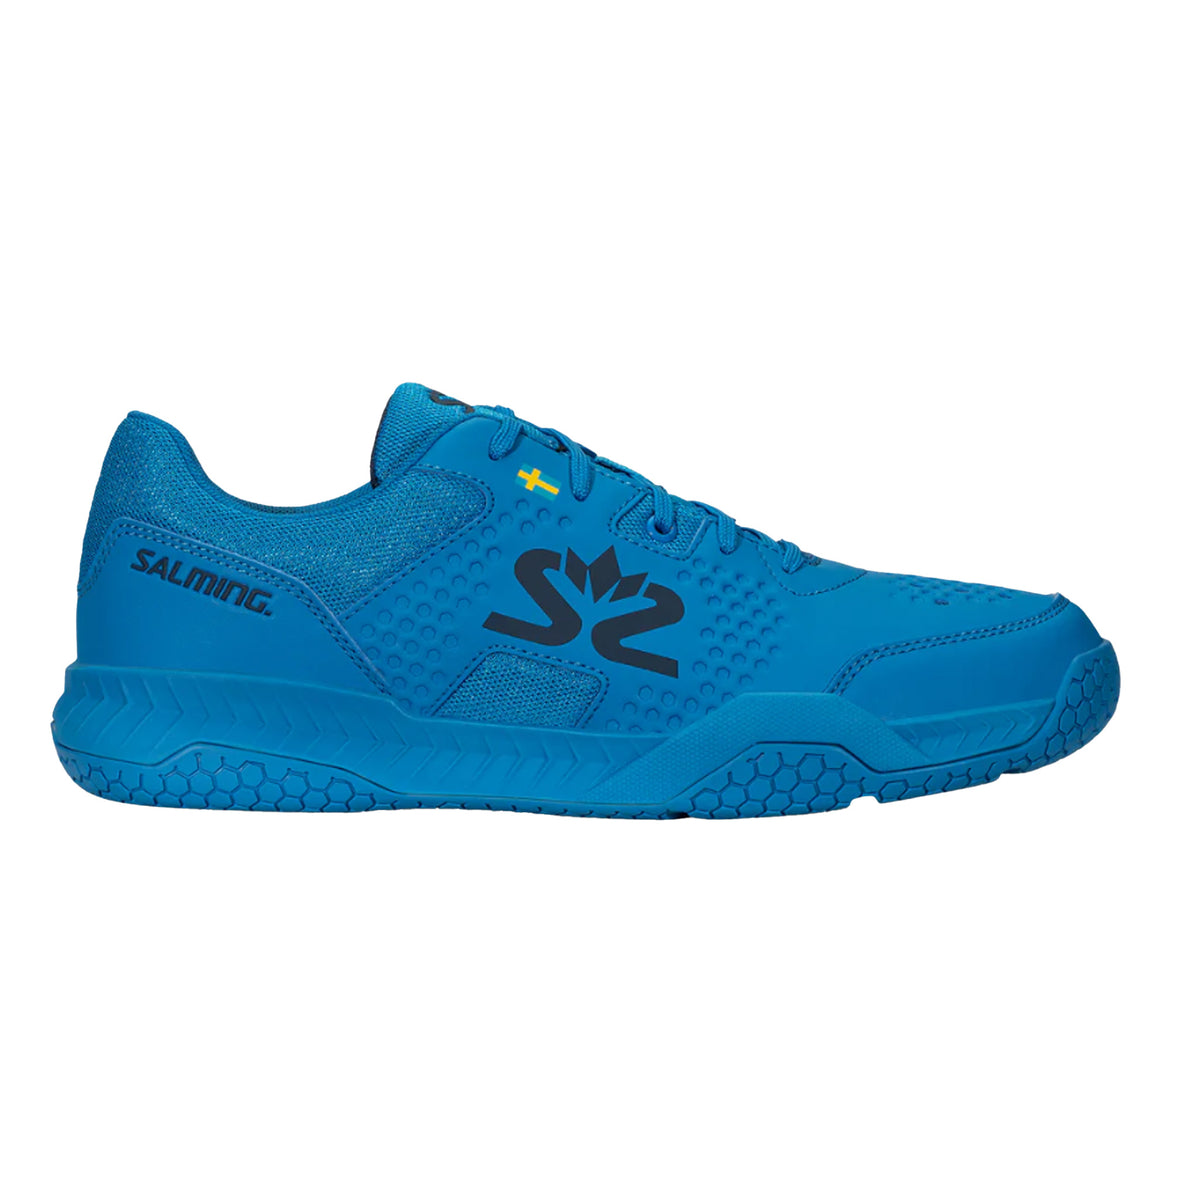 Salming Hawk Mens Indoor Court Shoes: Blue